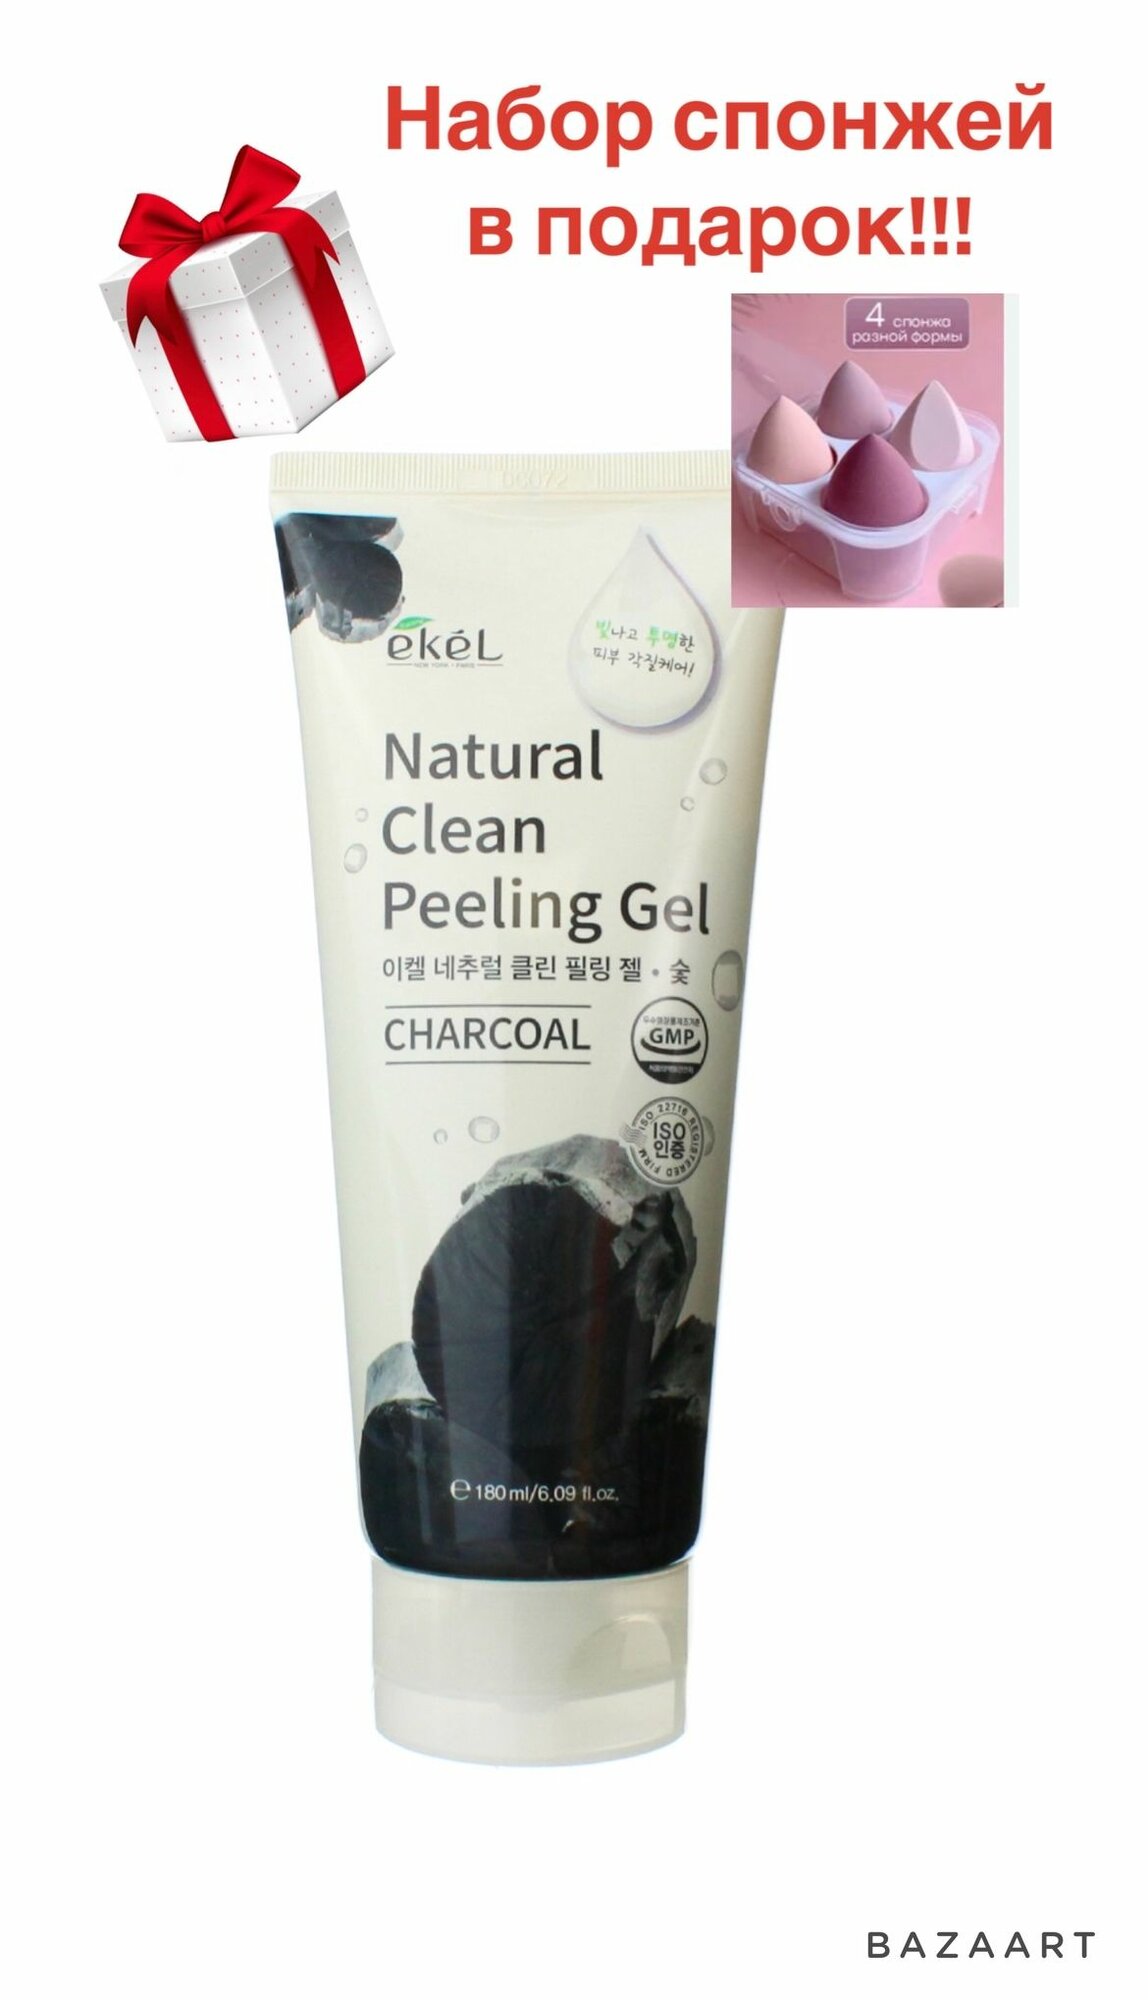 E Kel Пилинг-скатка с экстрактом древесного угля EKEL Natural Clean peeling gel Charcoal 100 мл